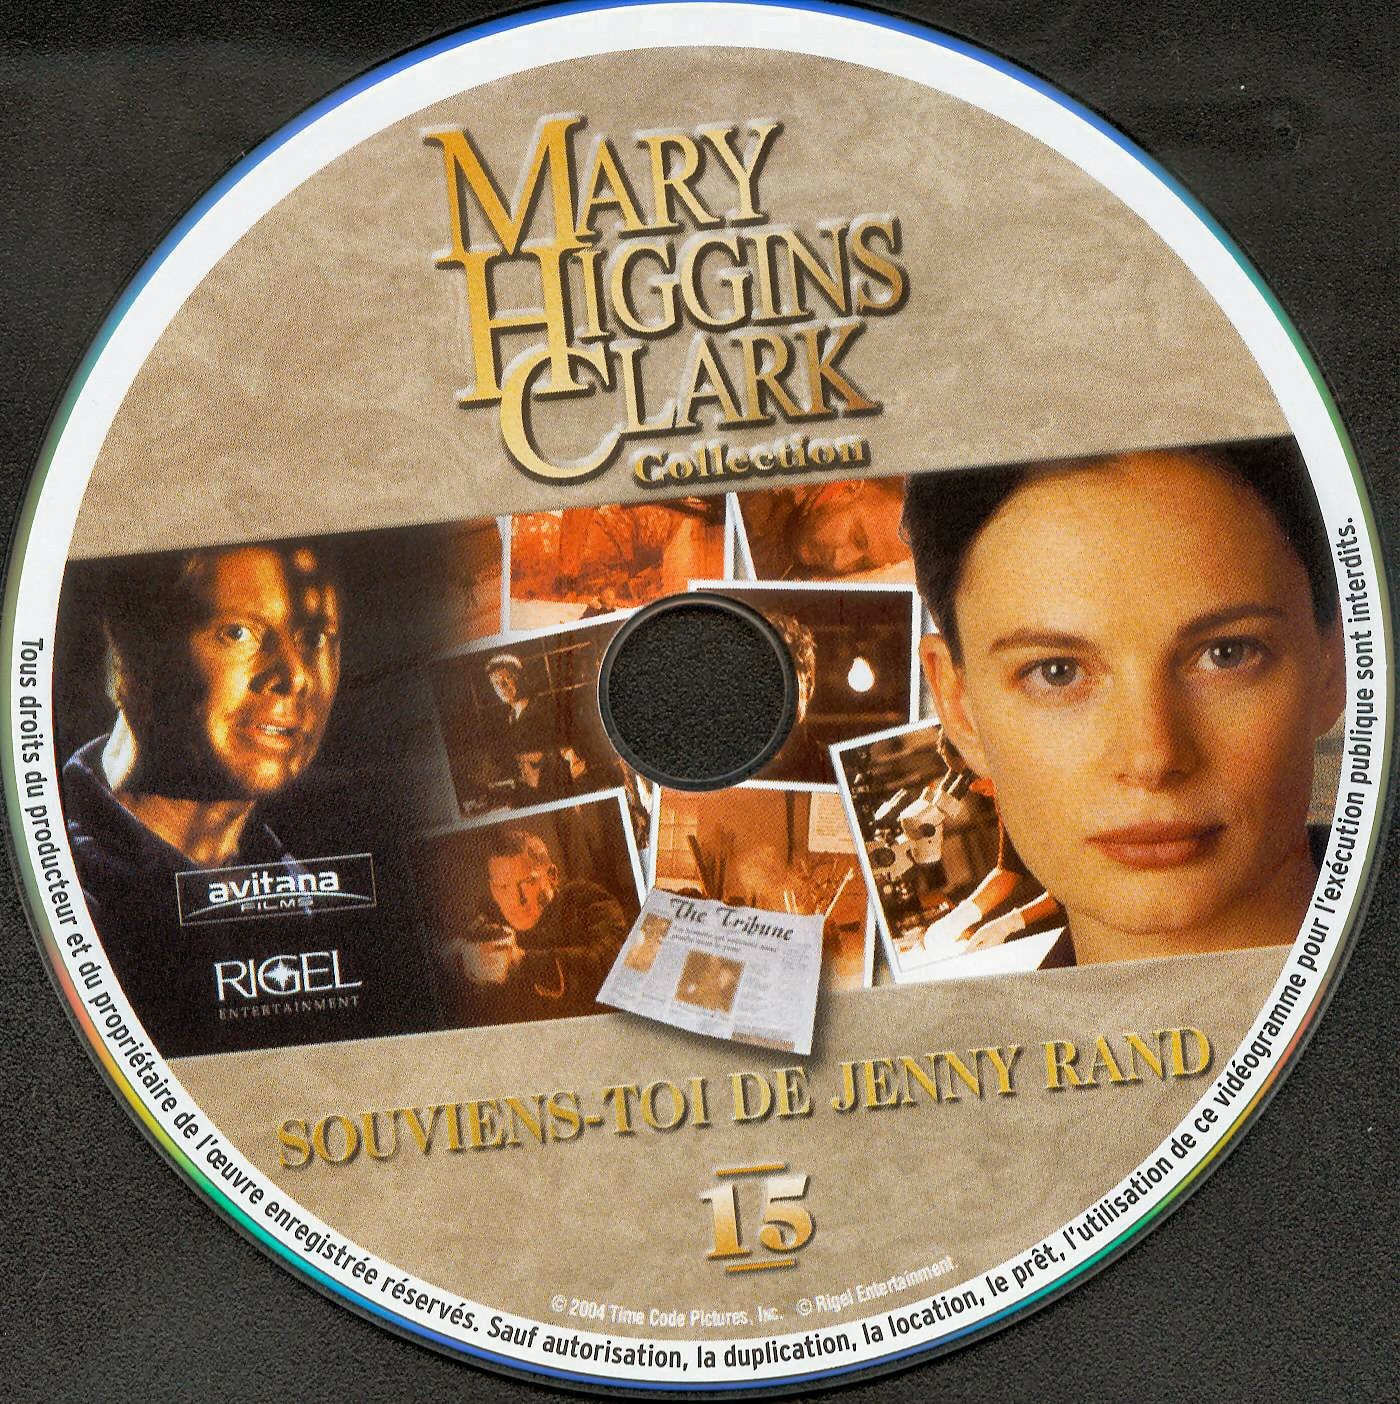 Sticker de Mary Higgins Clark vol 15 - Souviens toi de Jenny Rand - Cinéma Passion